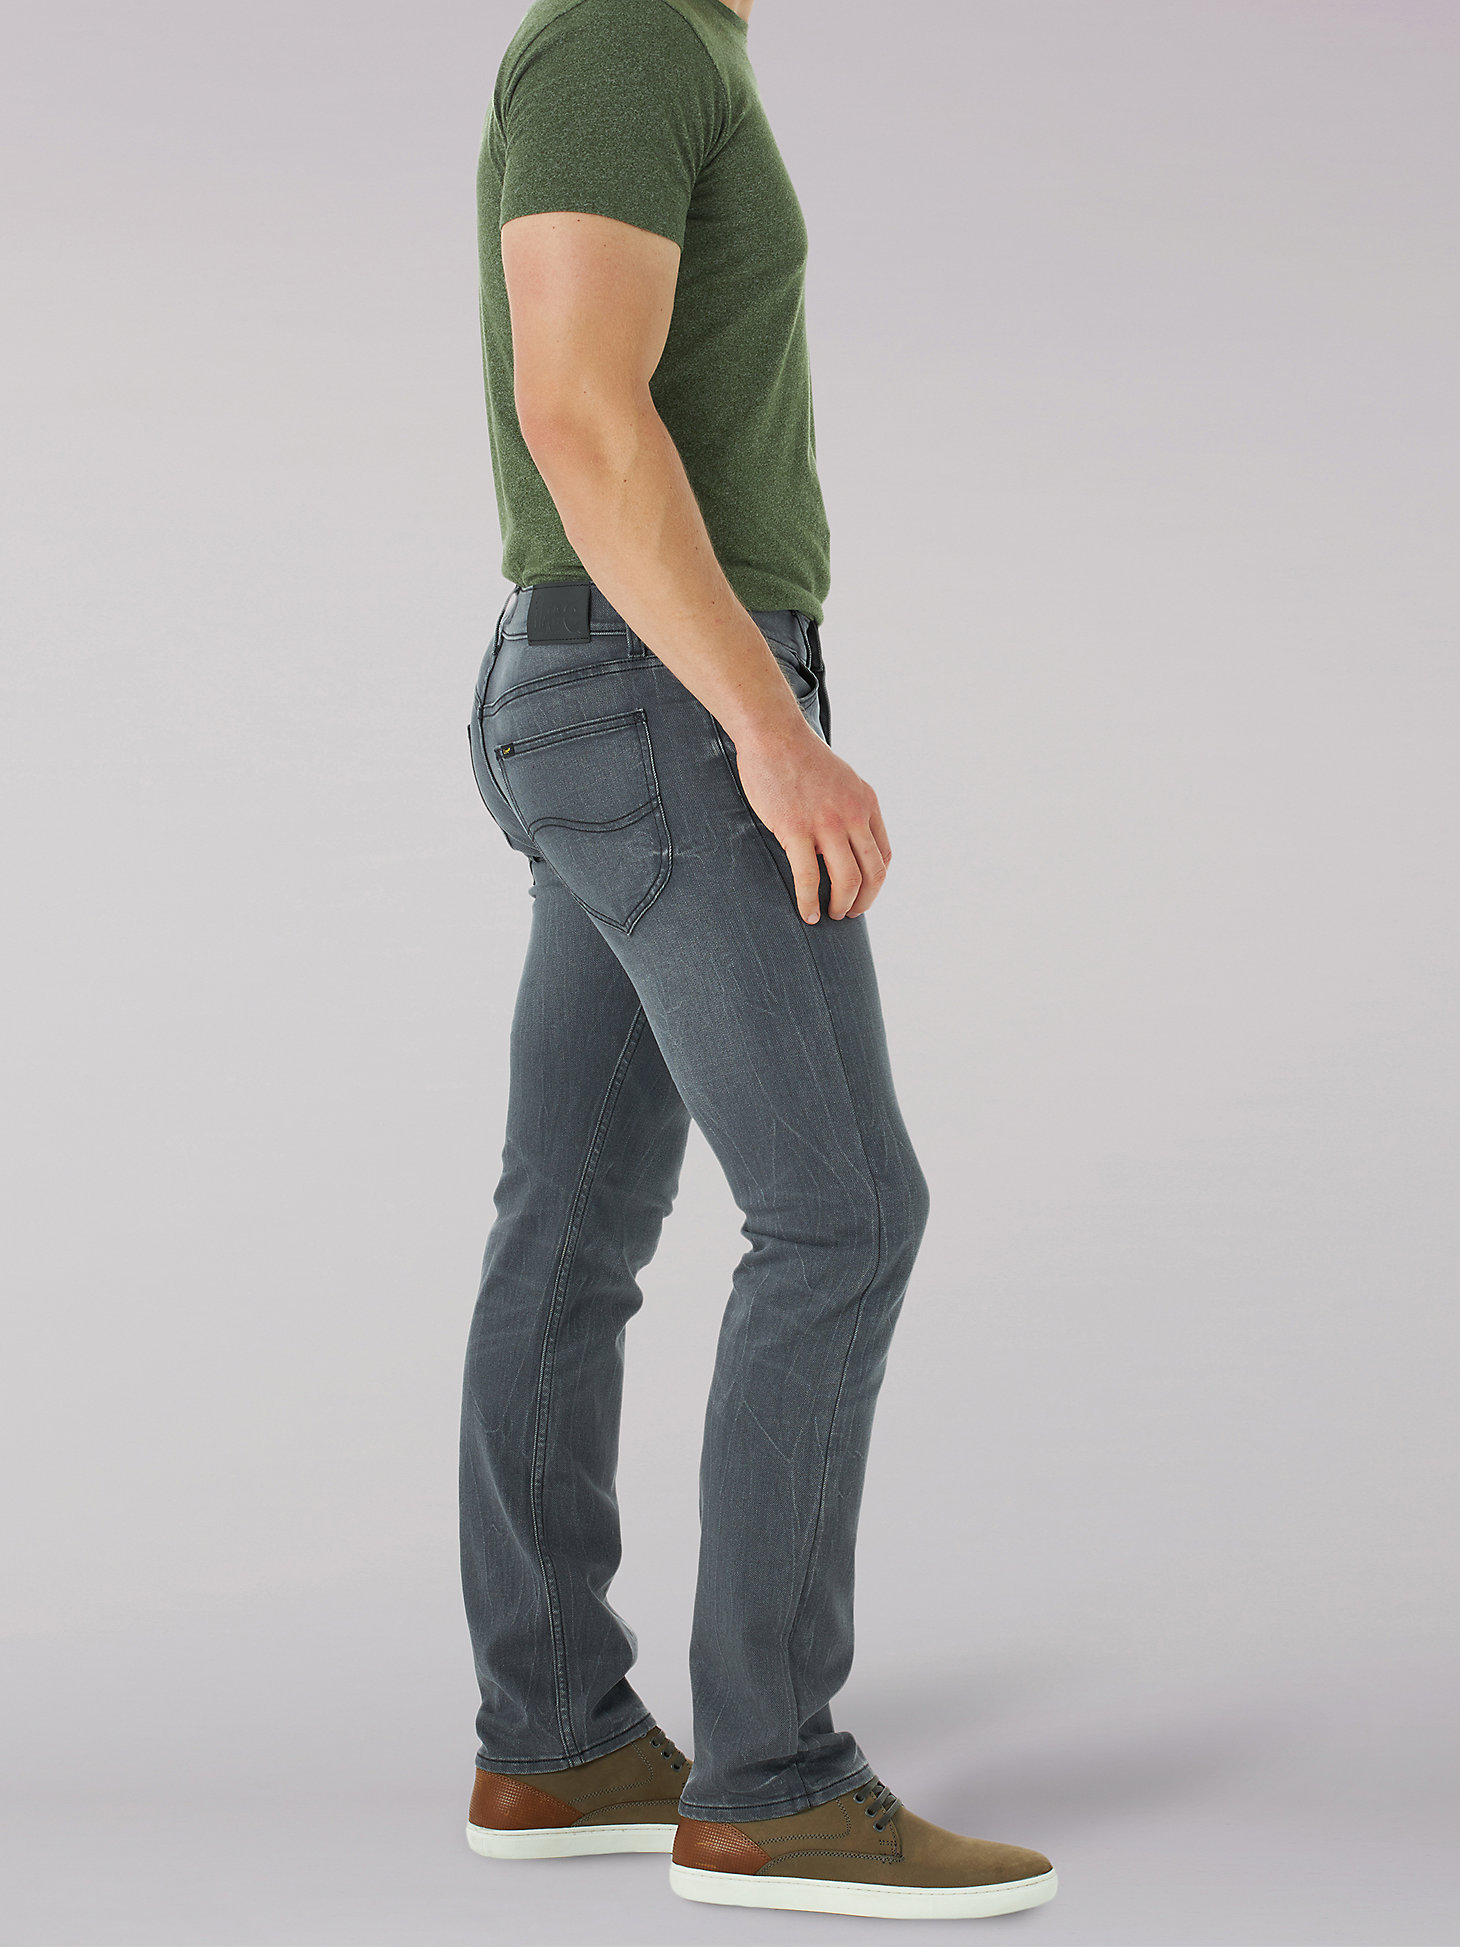 Men's Legendary Slim Straight Jean in Salt alternative view 2